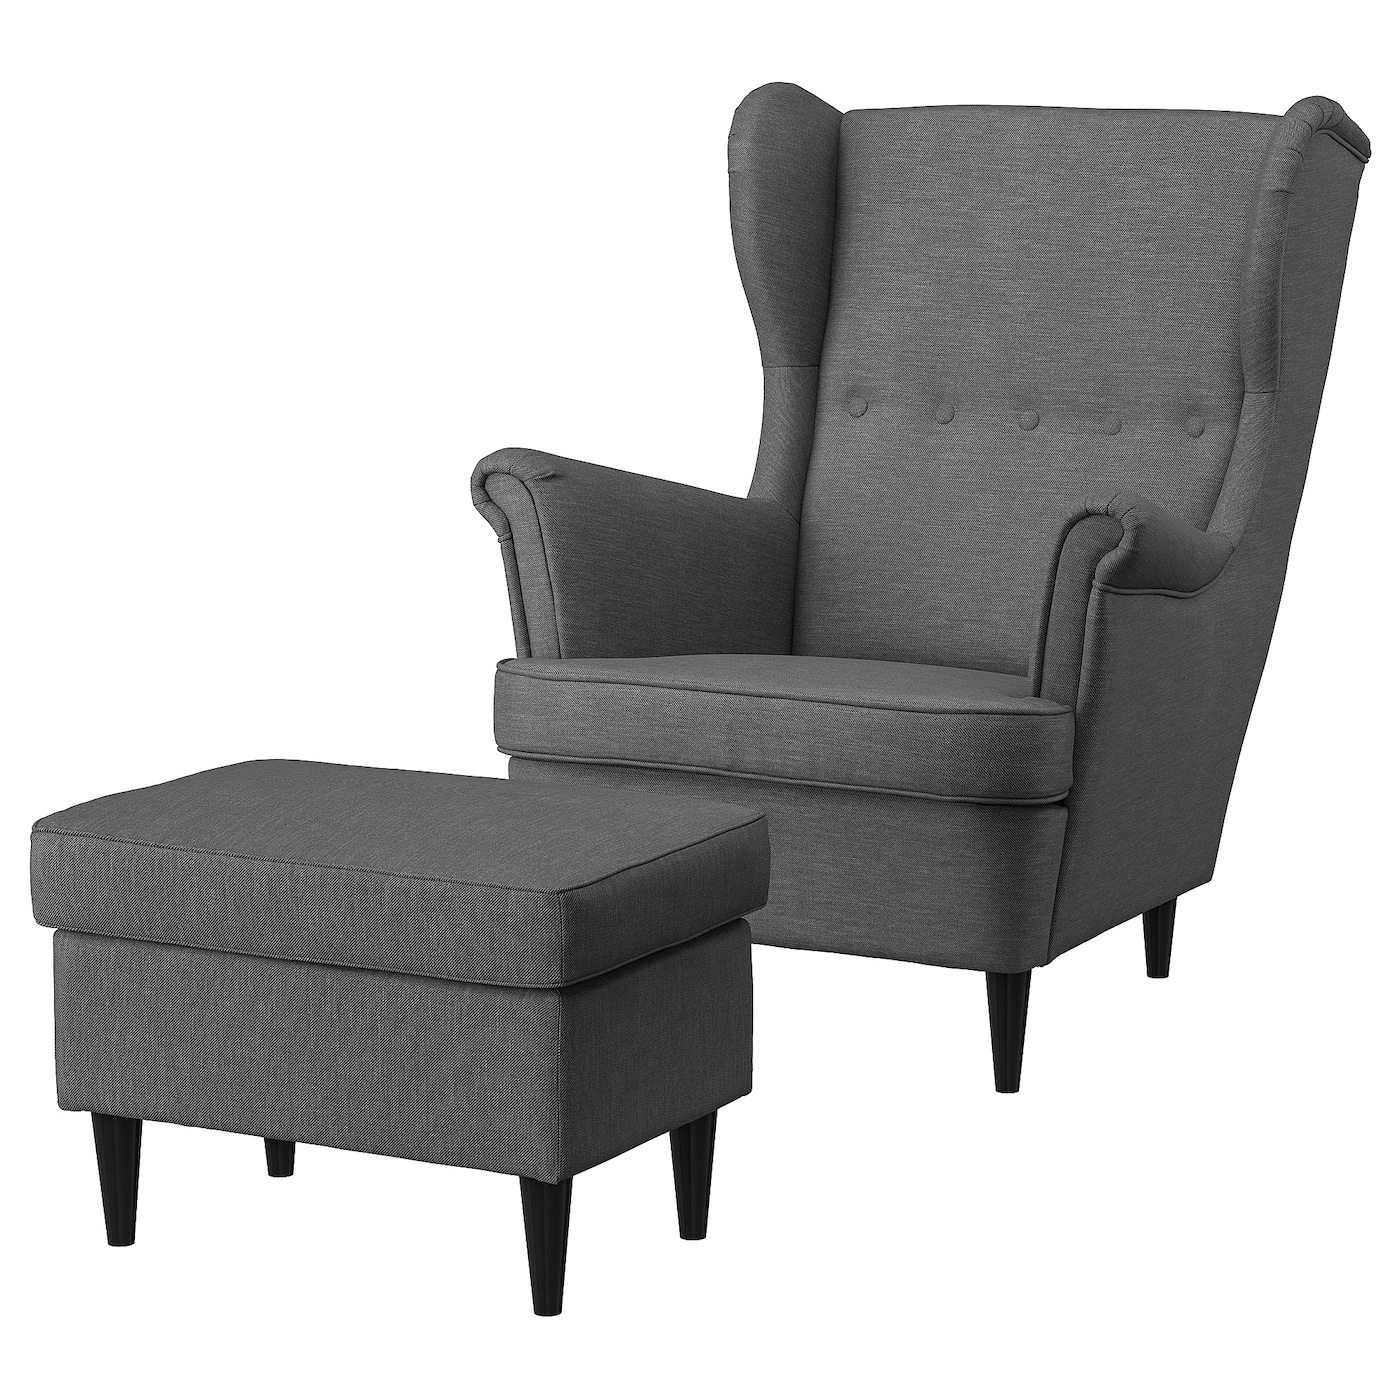 СТРАНДМОН Кресло и подставка для ног, Нордвала темно-серый STRANDMON IKEA